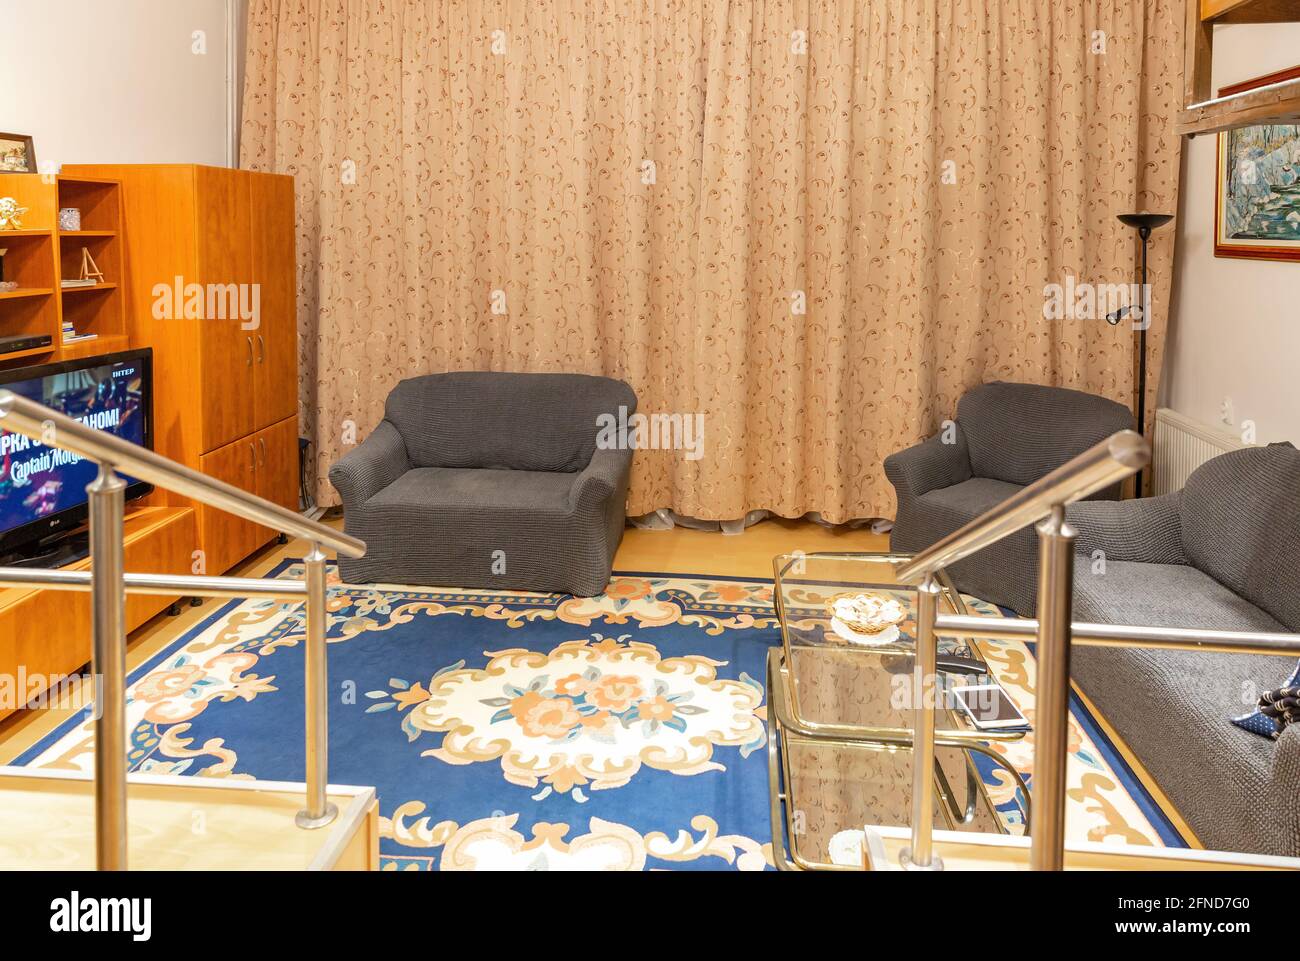 Nyiregyhaza, Hungary. January 05, 2020: Cozy living room interior with large floral carpet. Stock Photo